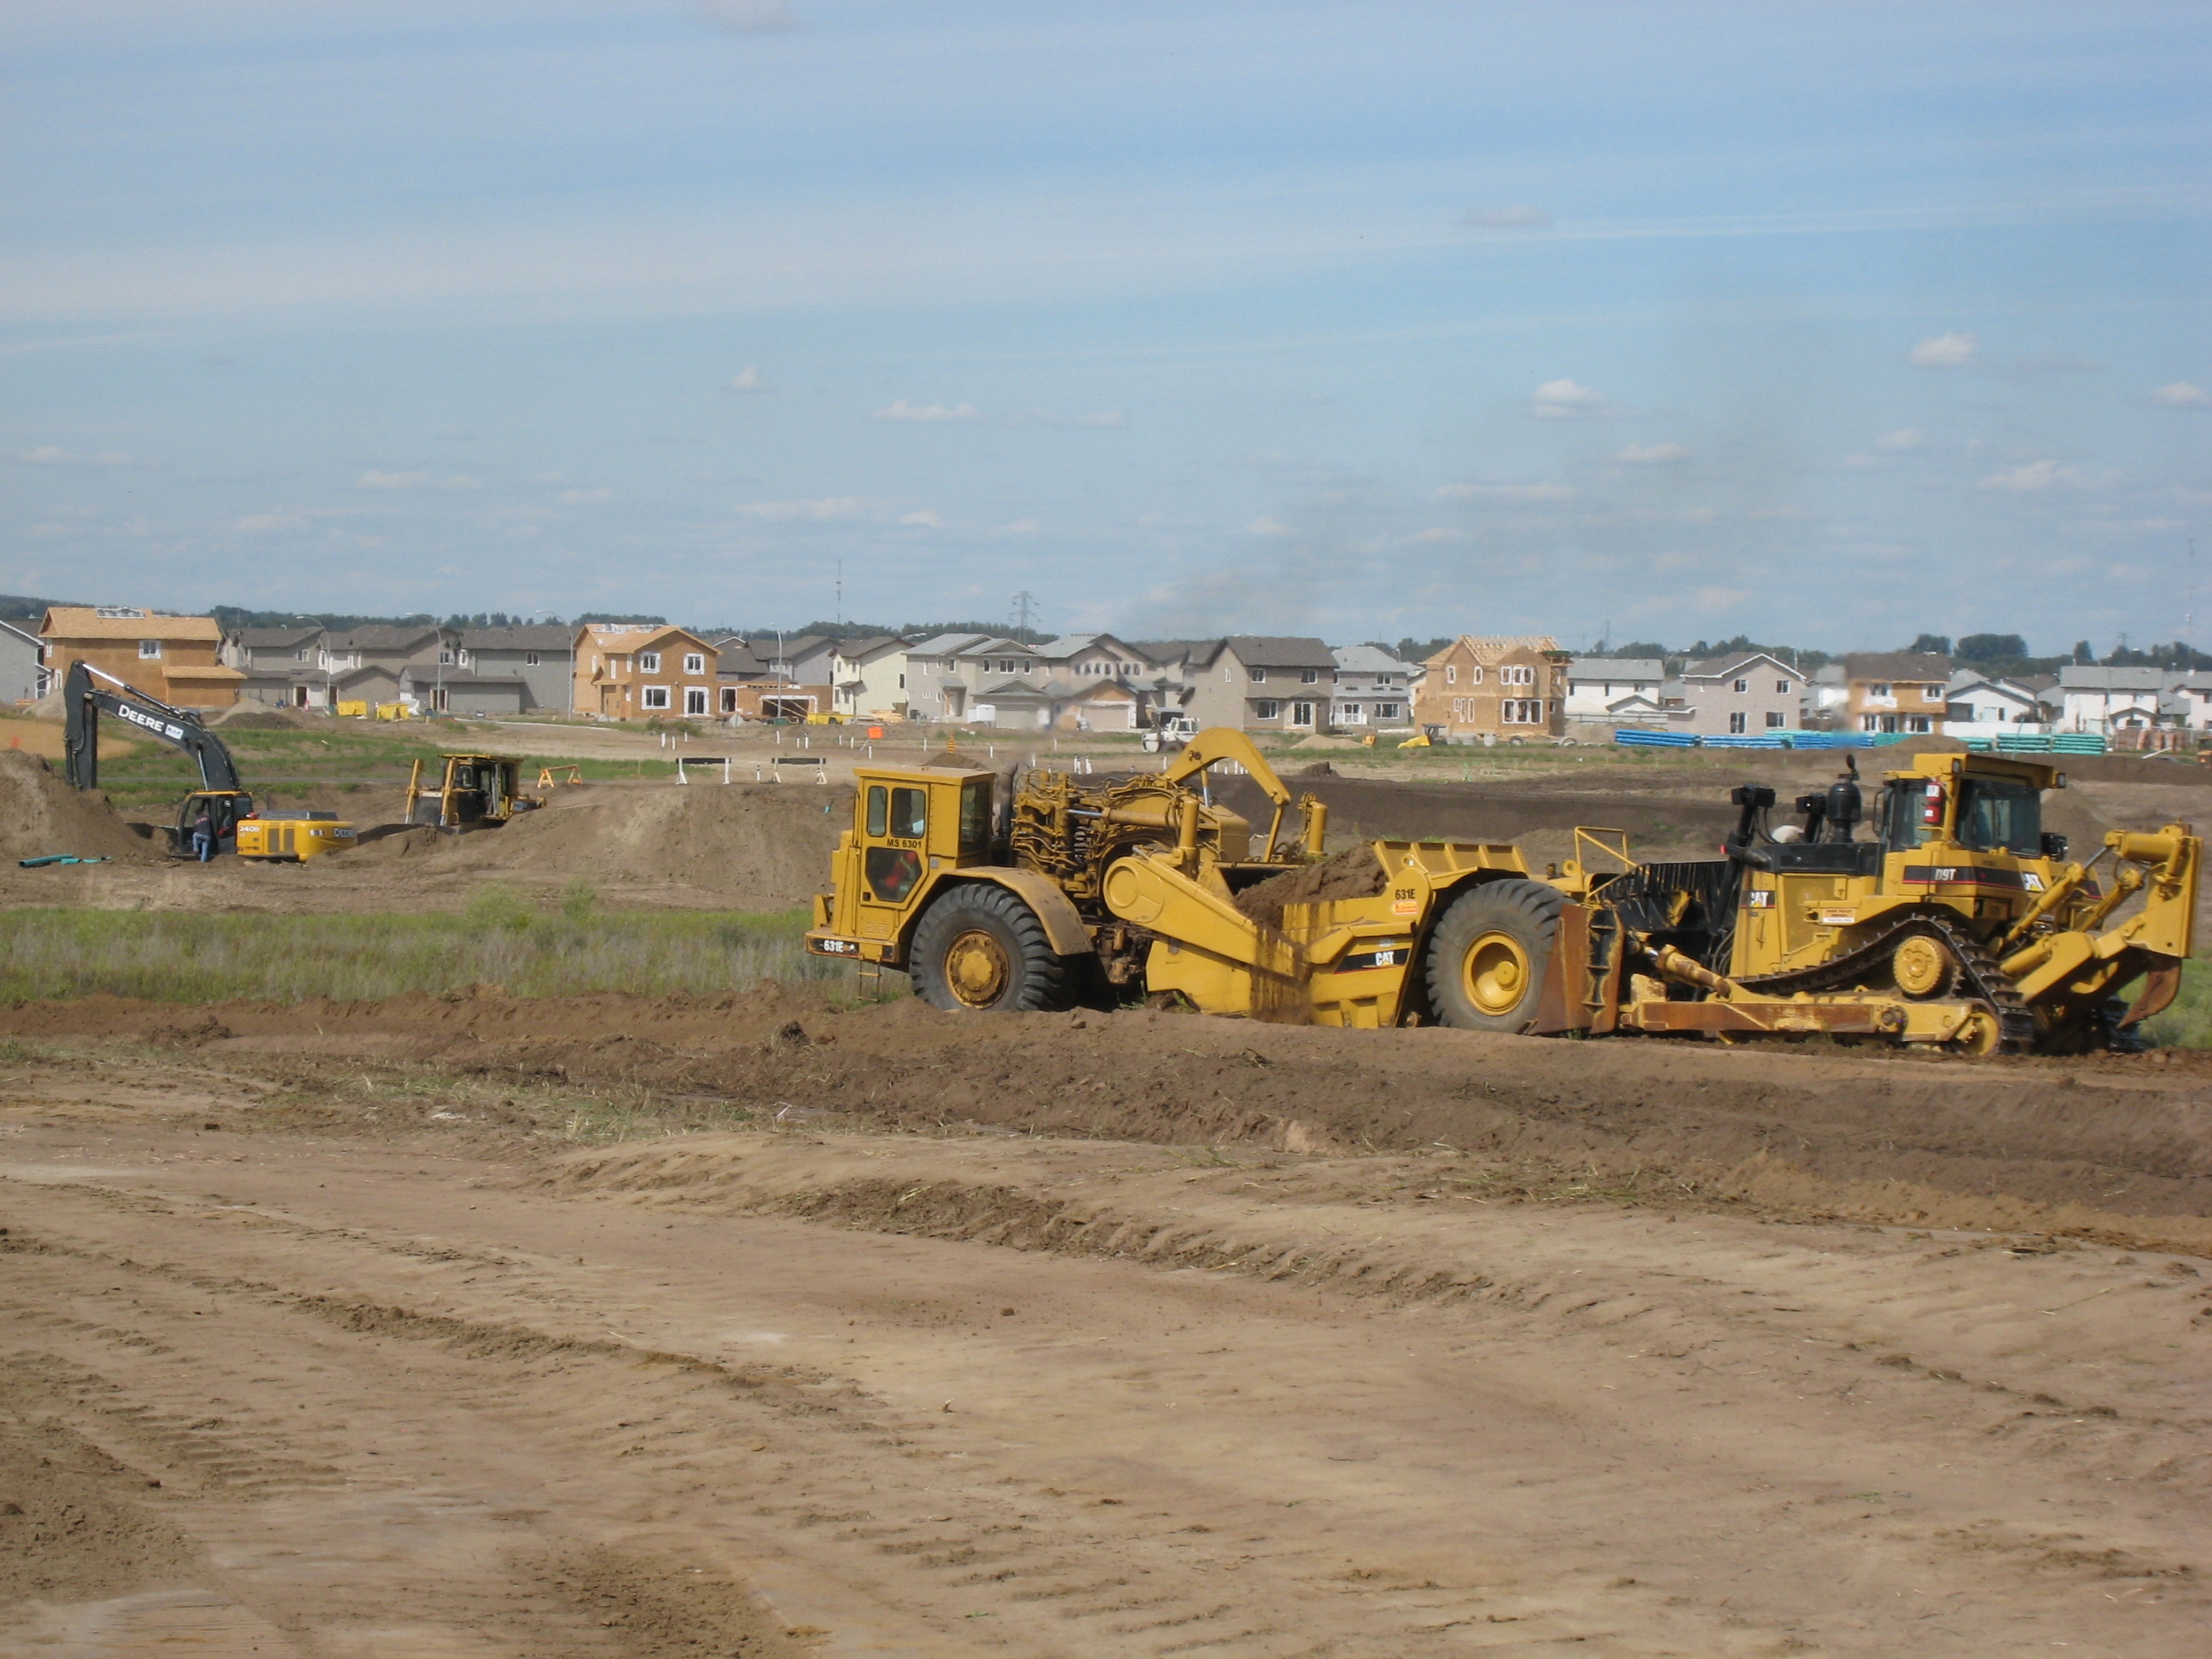 Residential Development, Ft. Saskatchewan AB, 2007